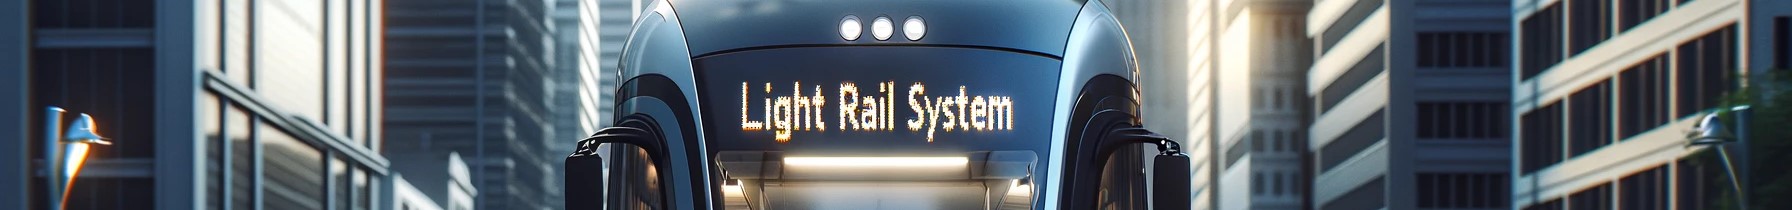 Light Rail System